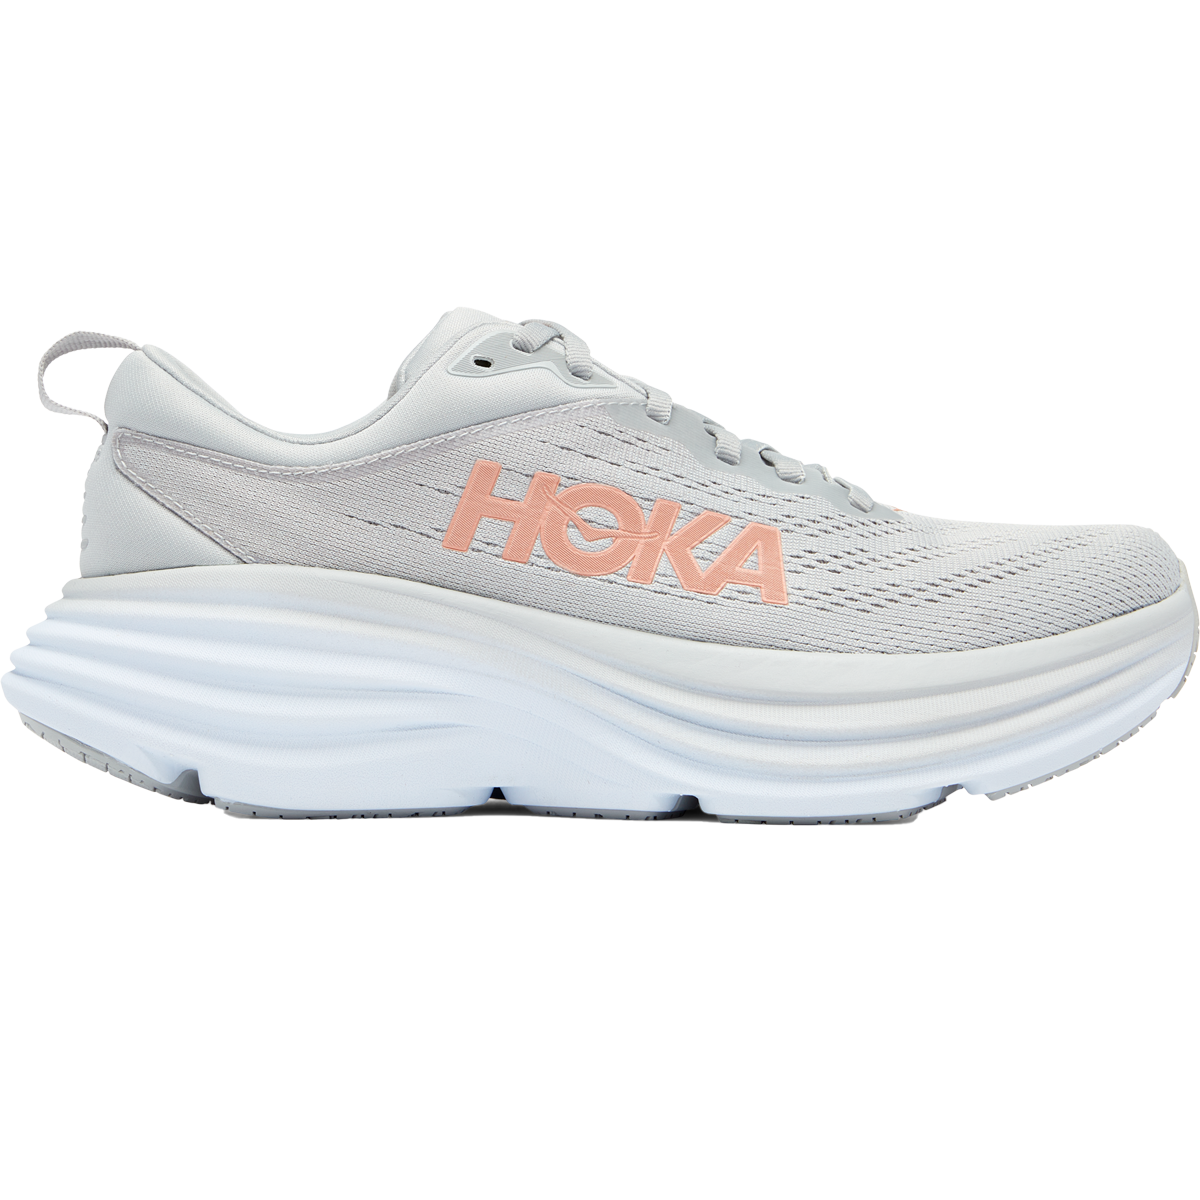 Hoka One One Womens Bondi 7 Gray Running Shoes Sneakers Size 10